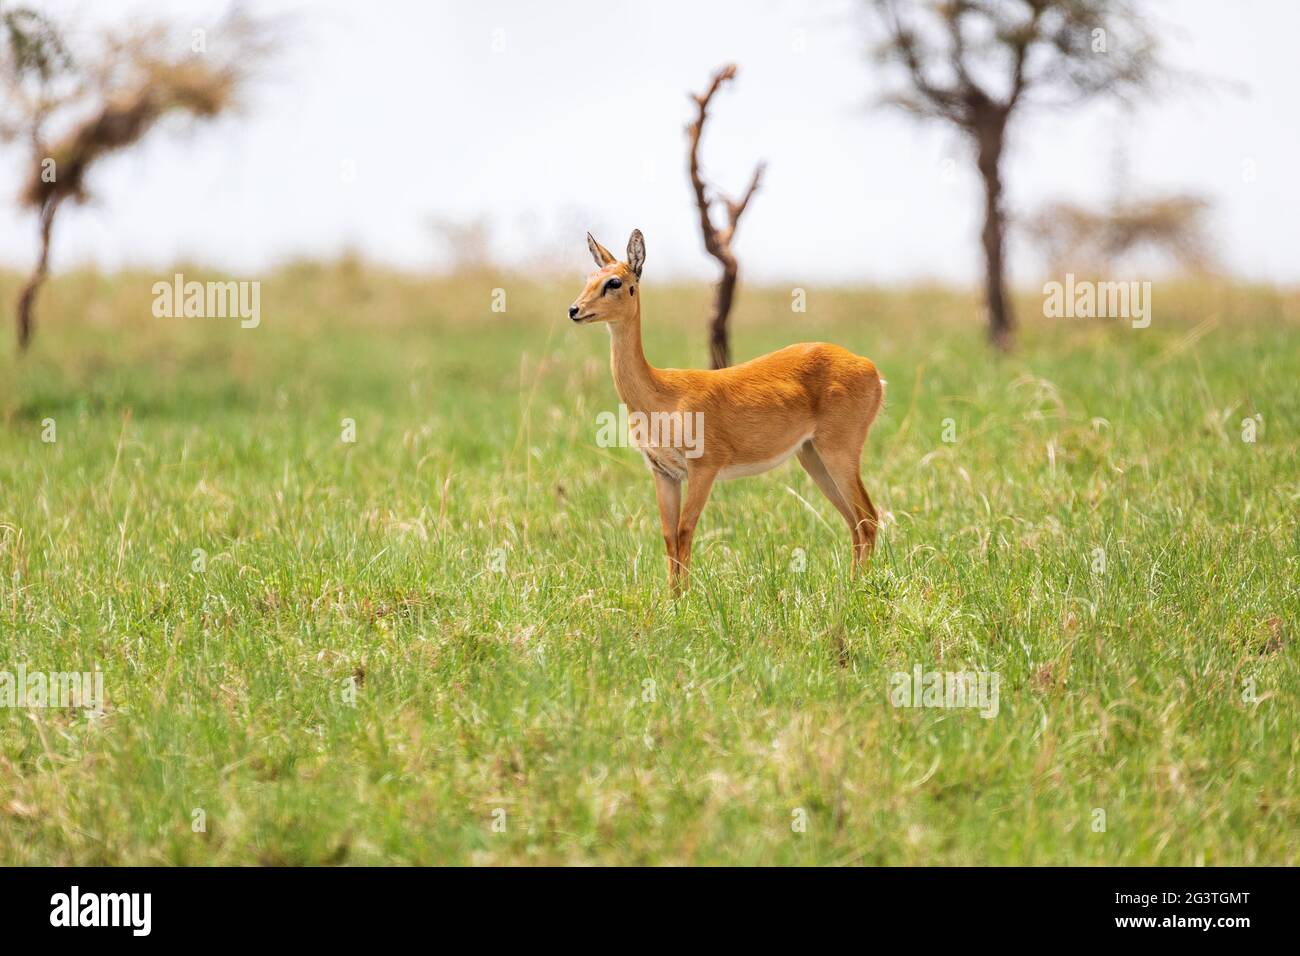 Cute Oribi antelope Ethiopia, Africa wildlife Stock Photo